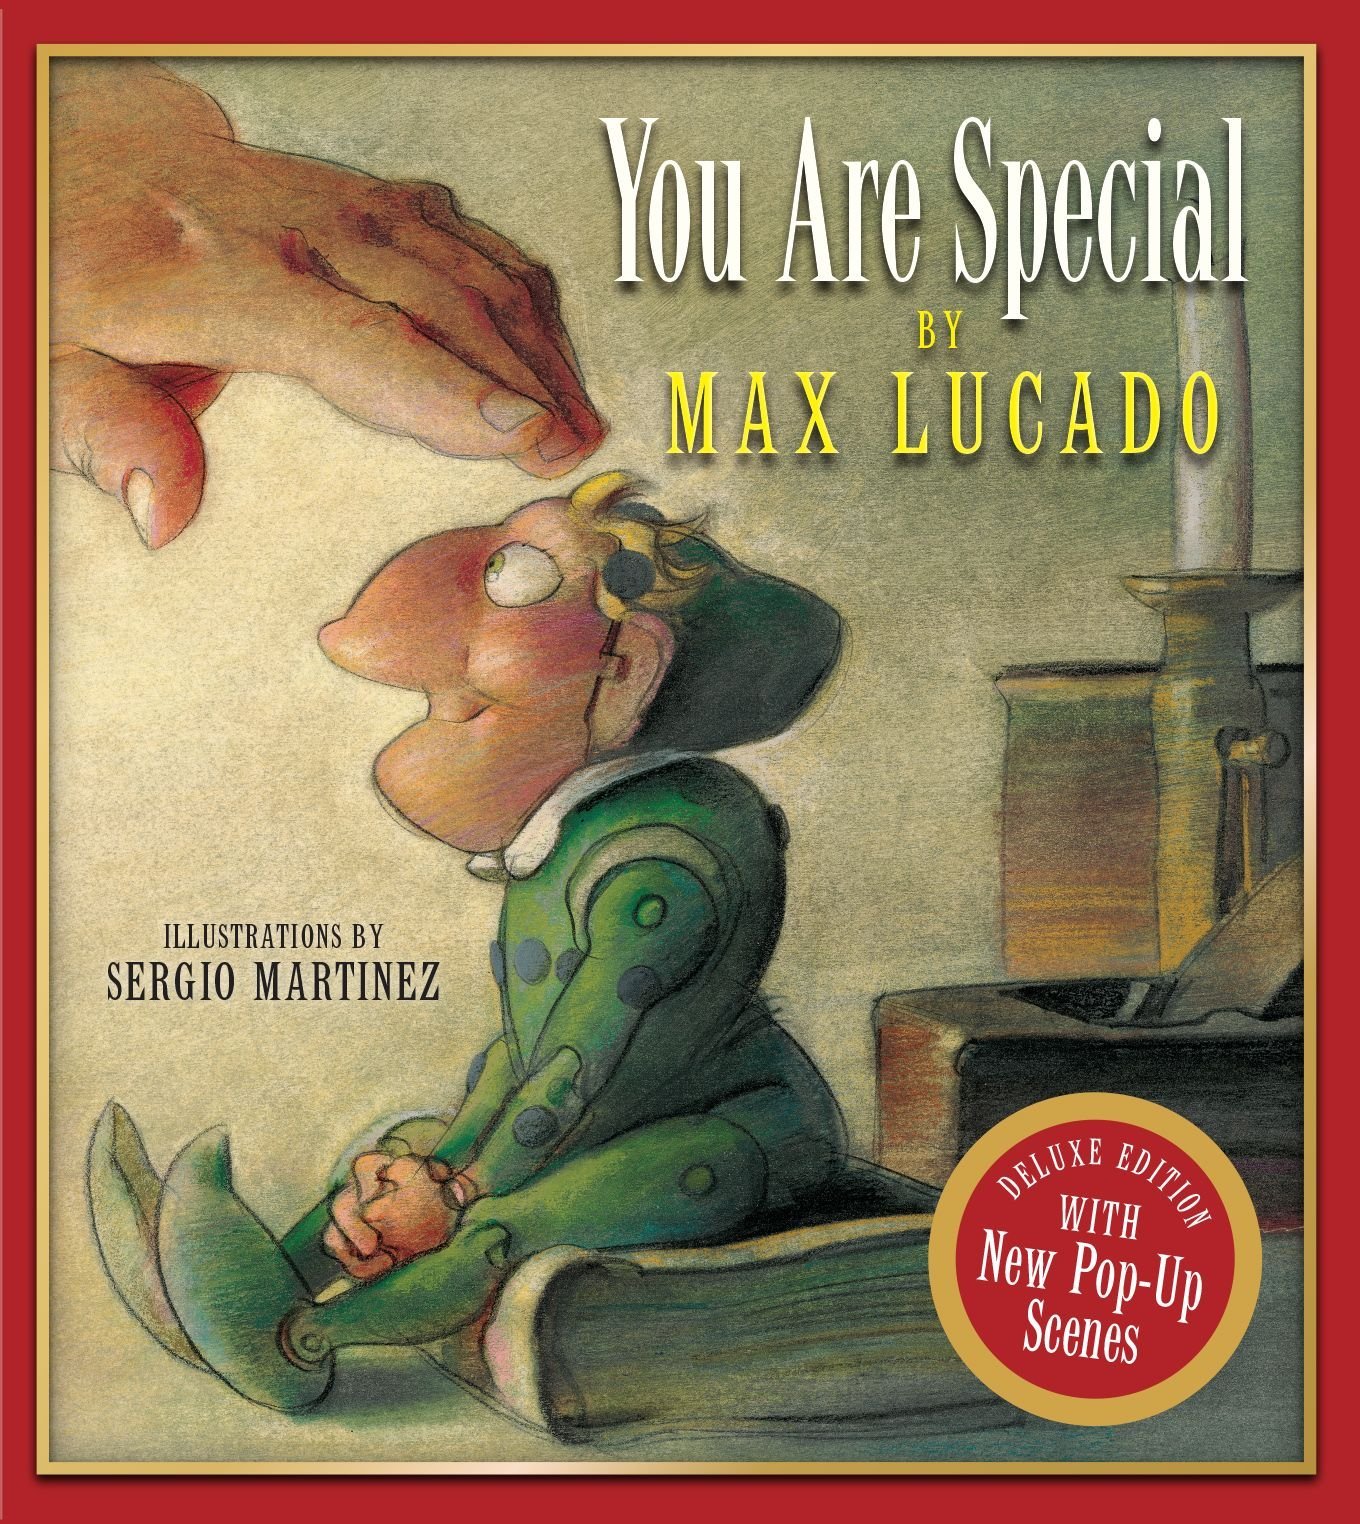 you are special max lucado activities